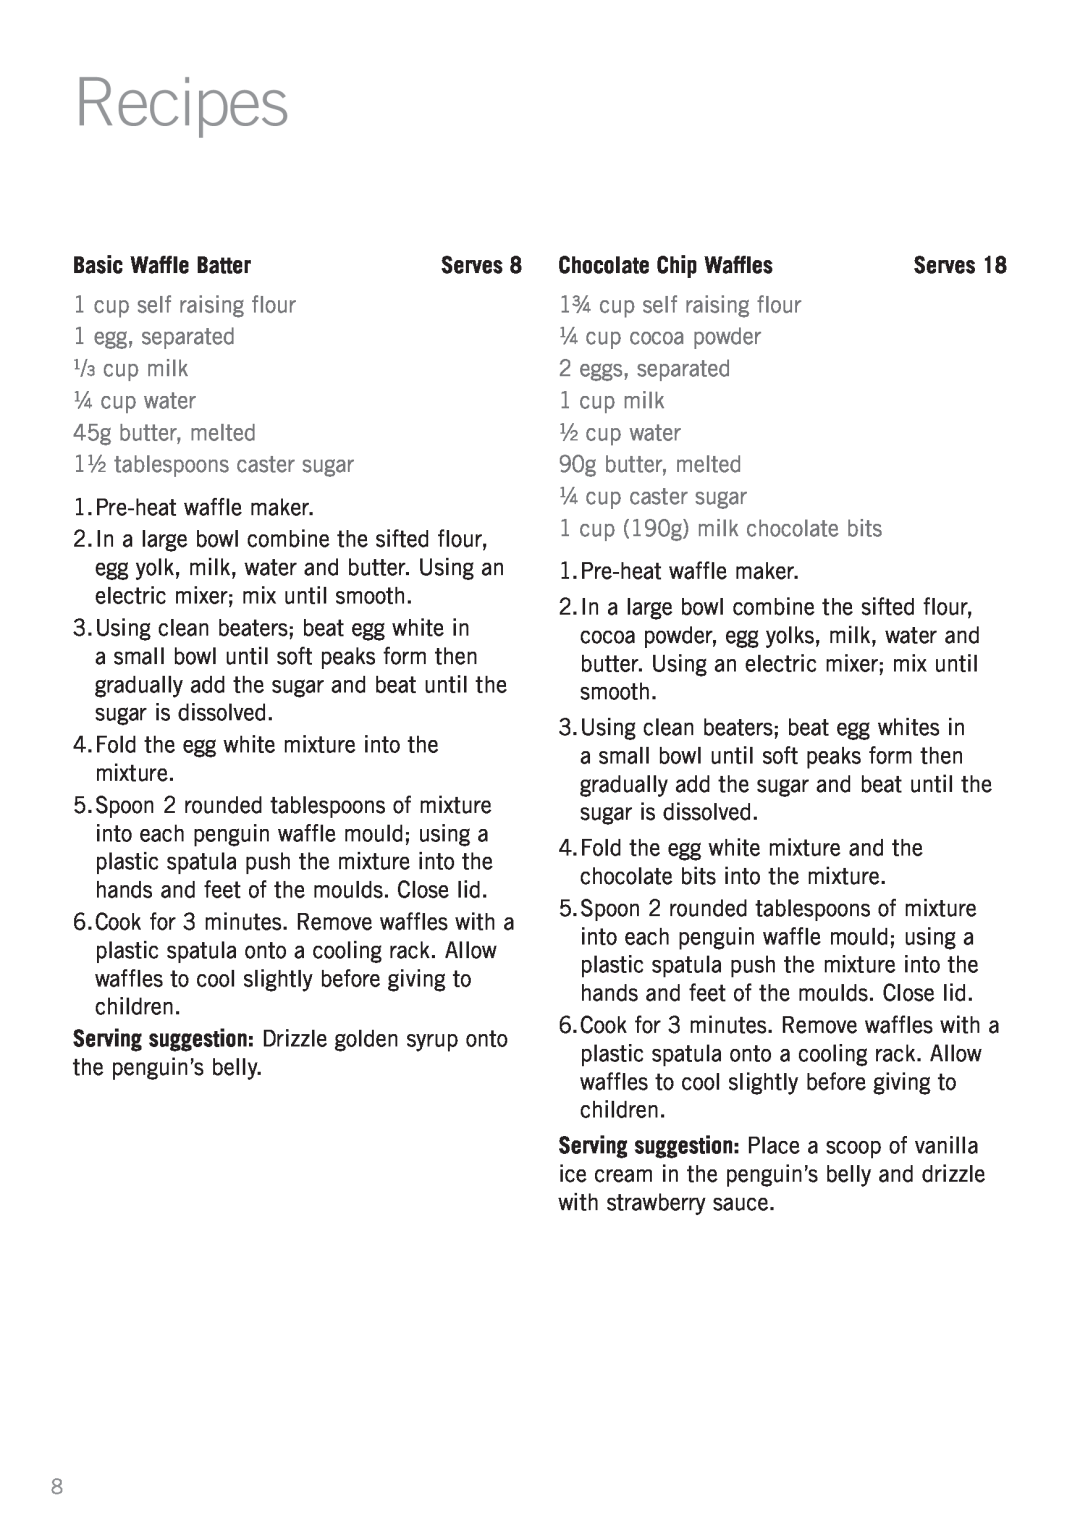 Sunbeam WM3100 manual Recipes, Basic Waffle Batter, cup self raising flour, ¼ cup water 45g butter, melted 